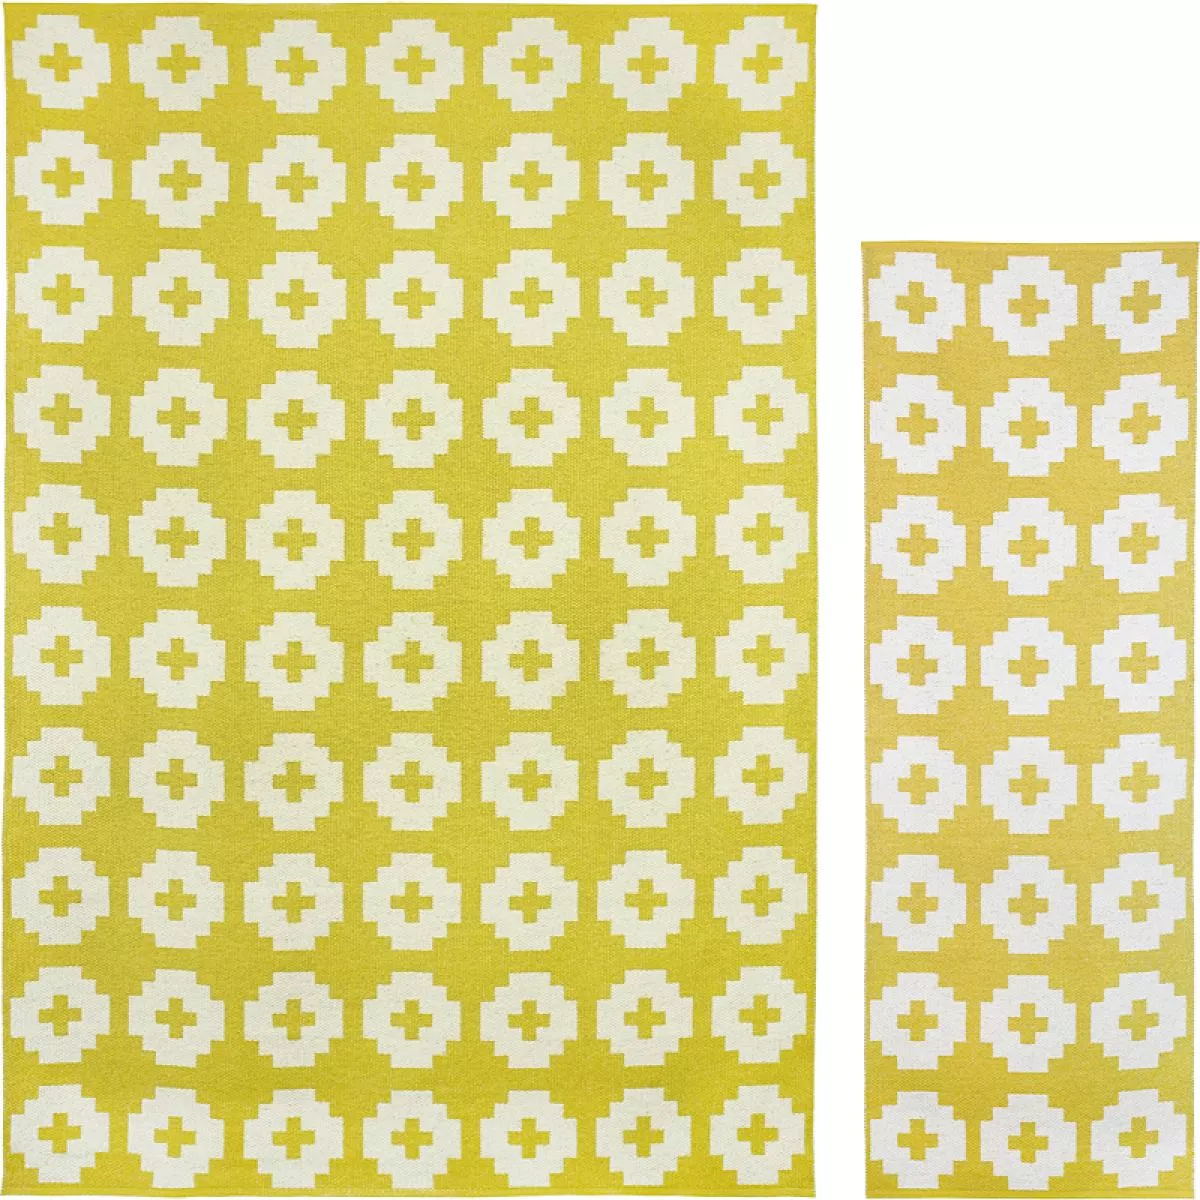 Swedish Plastic Rug „Flower“ (yellow) in various sizes | Kunstbaron